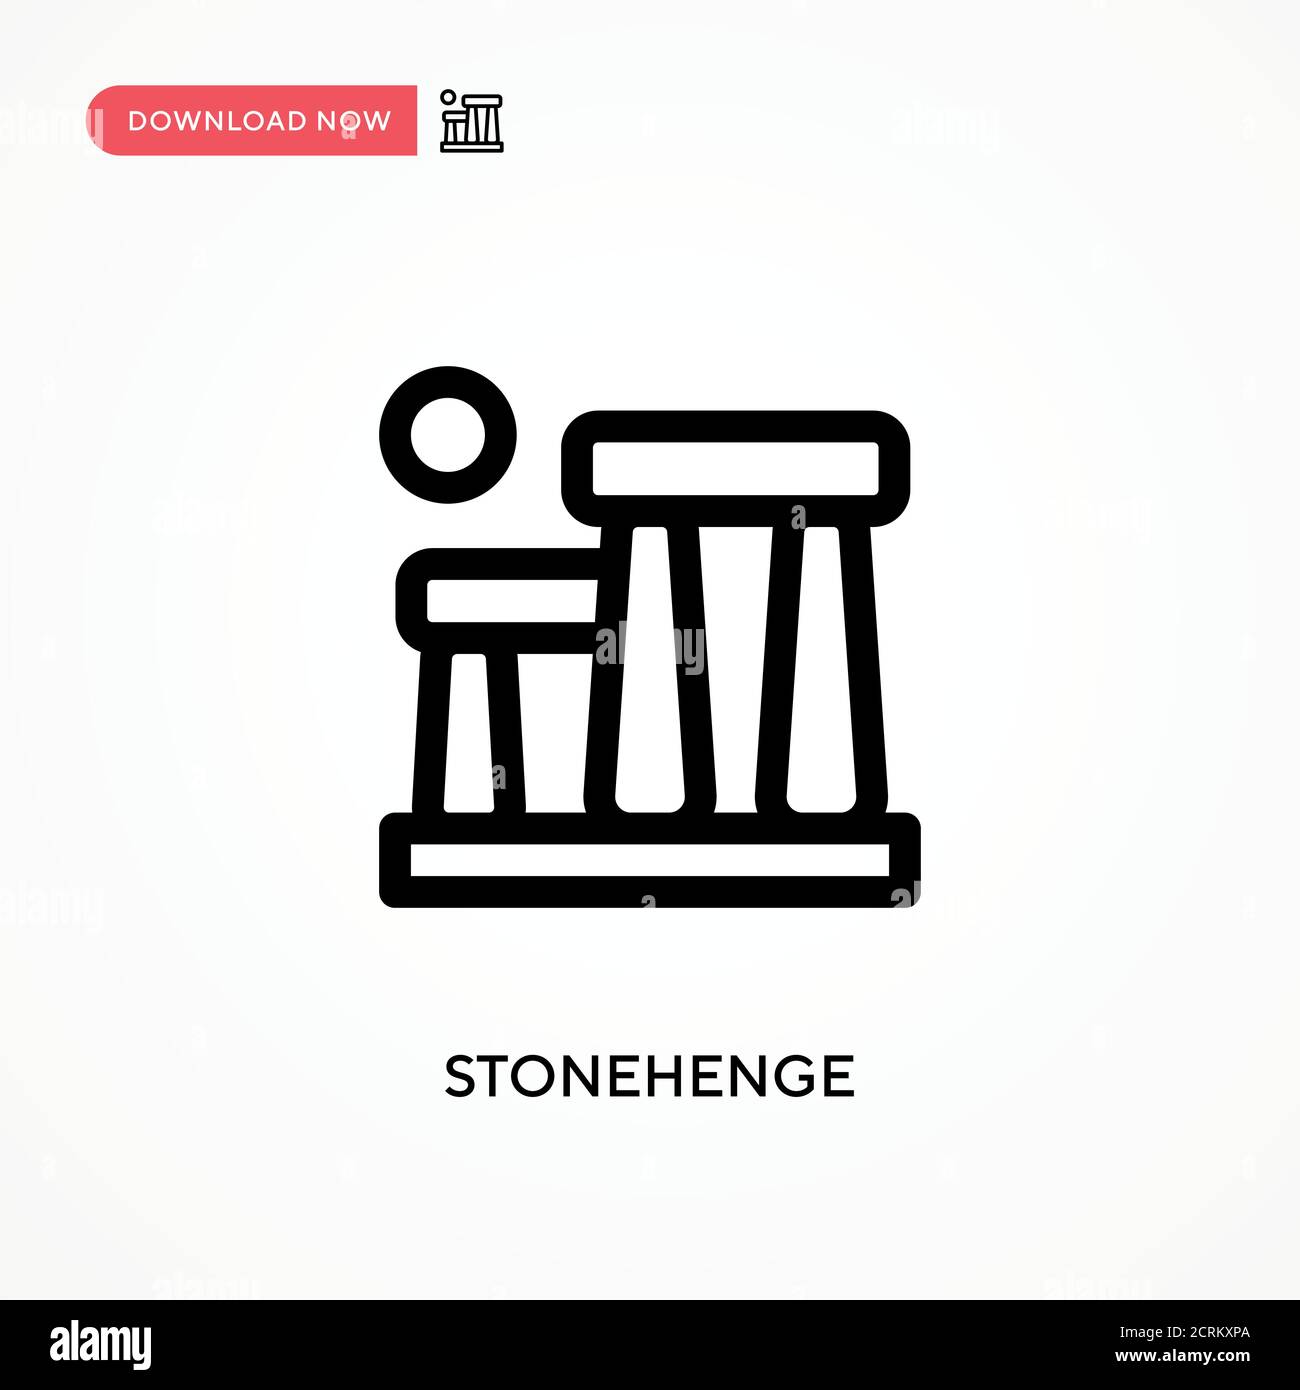 Einfaches Vektorsymbol Stonehenge. Moderne, einfache flache Vektor-Illustration für Website oder mobile App Stock Vektor